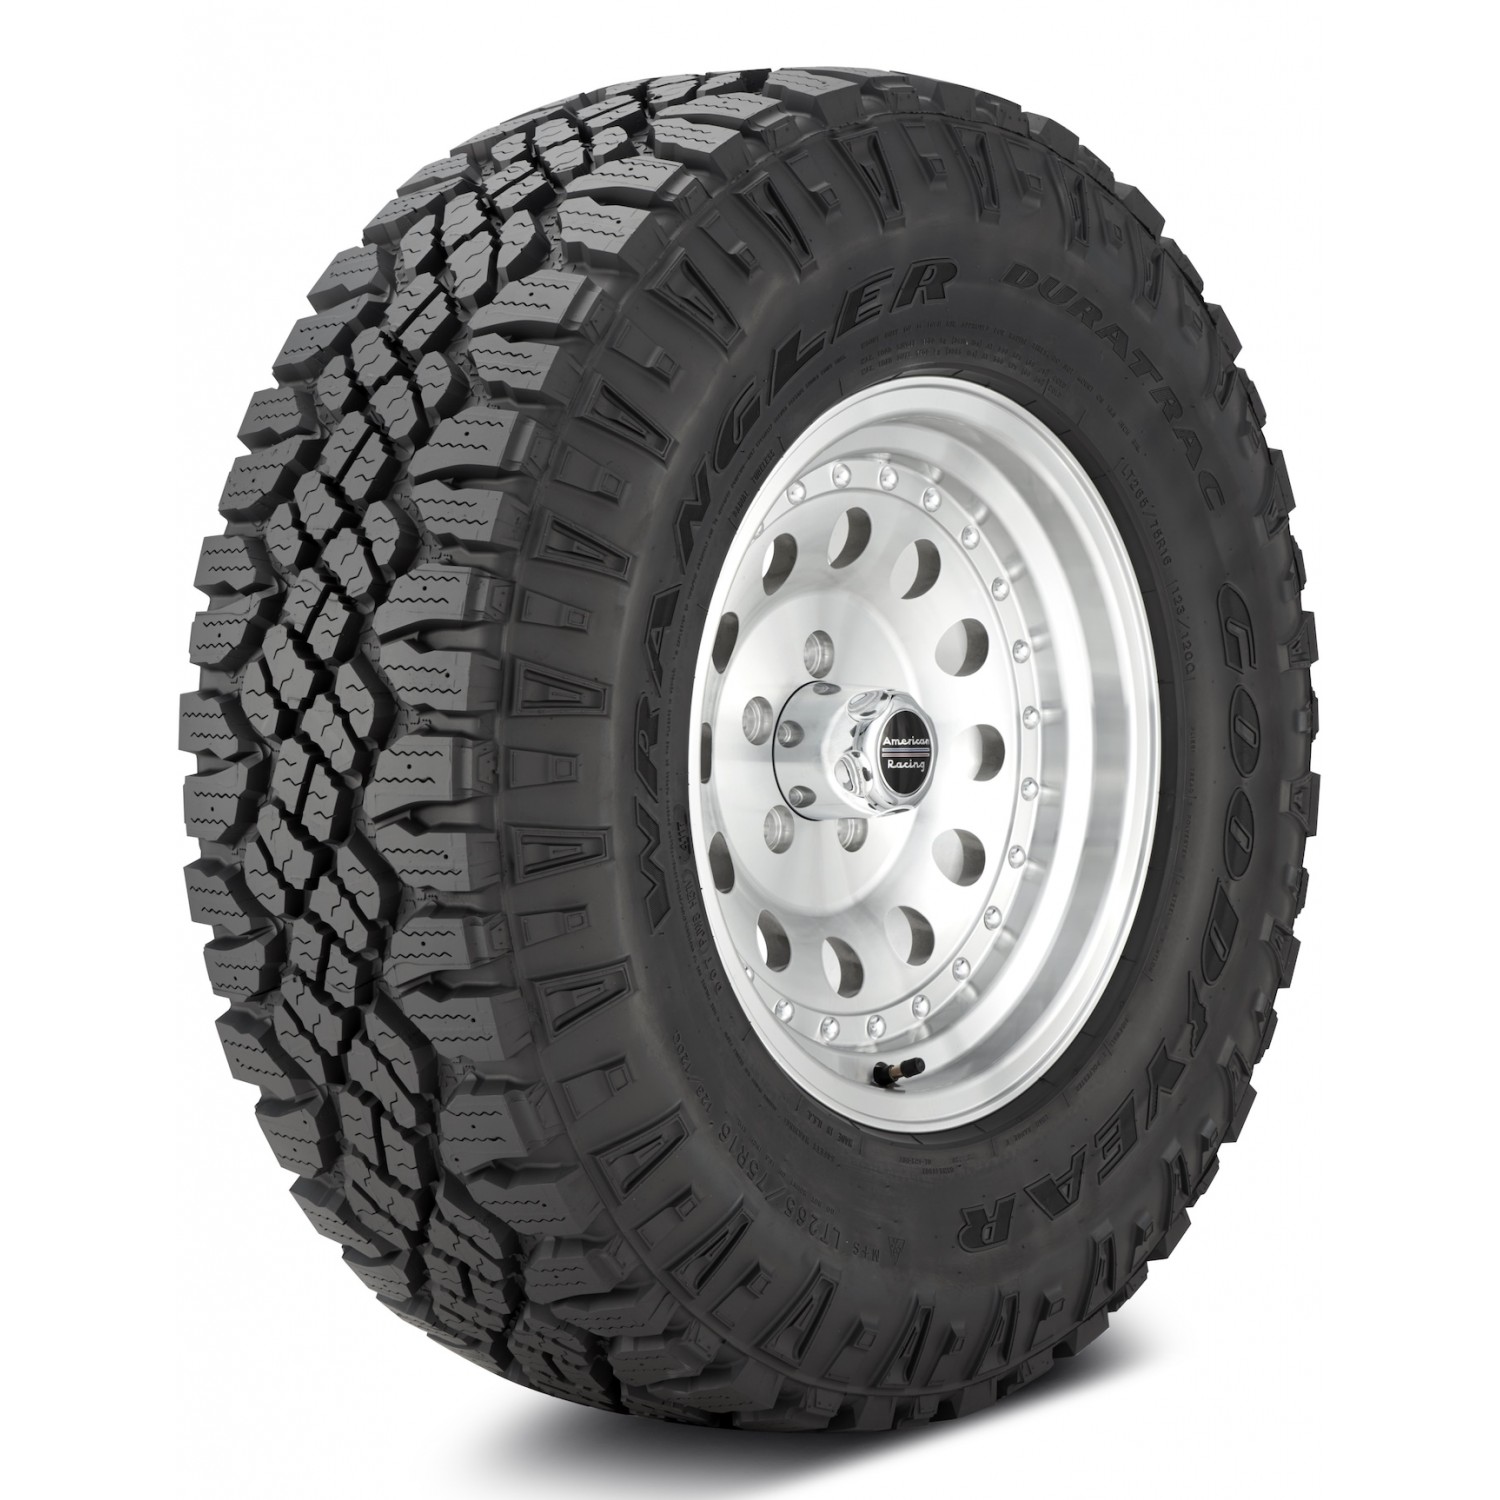 Goodyear Wrangler DuraTrac (P) Black Sidewall Tire (275/55R20 113T)  vzn121236